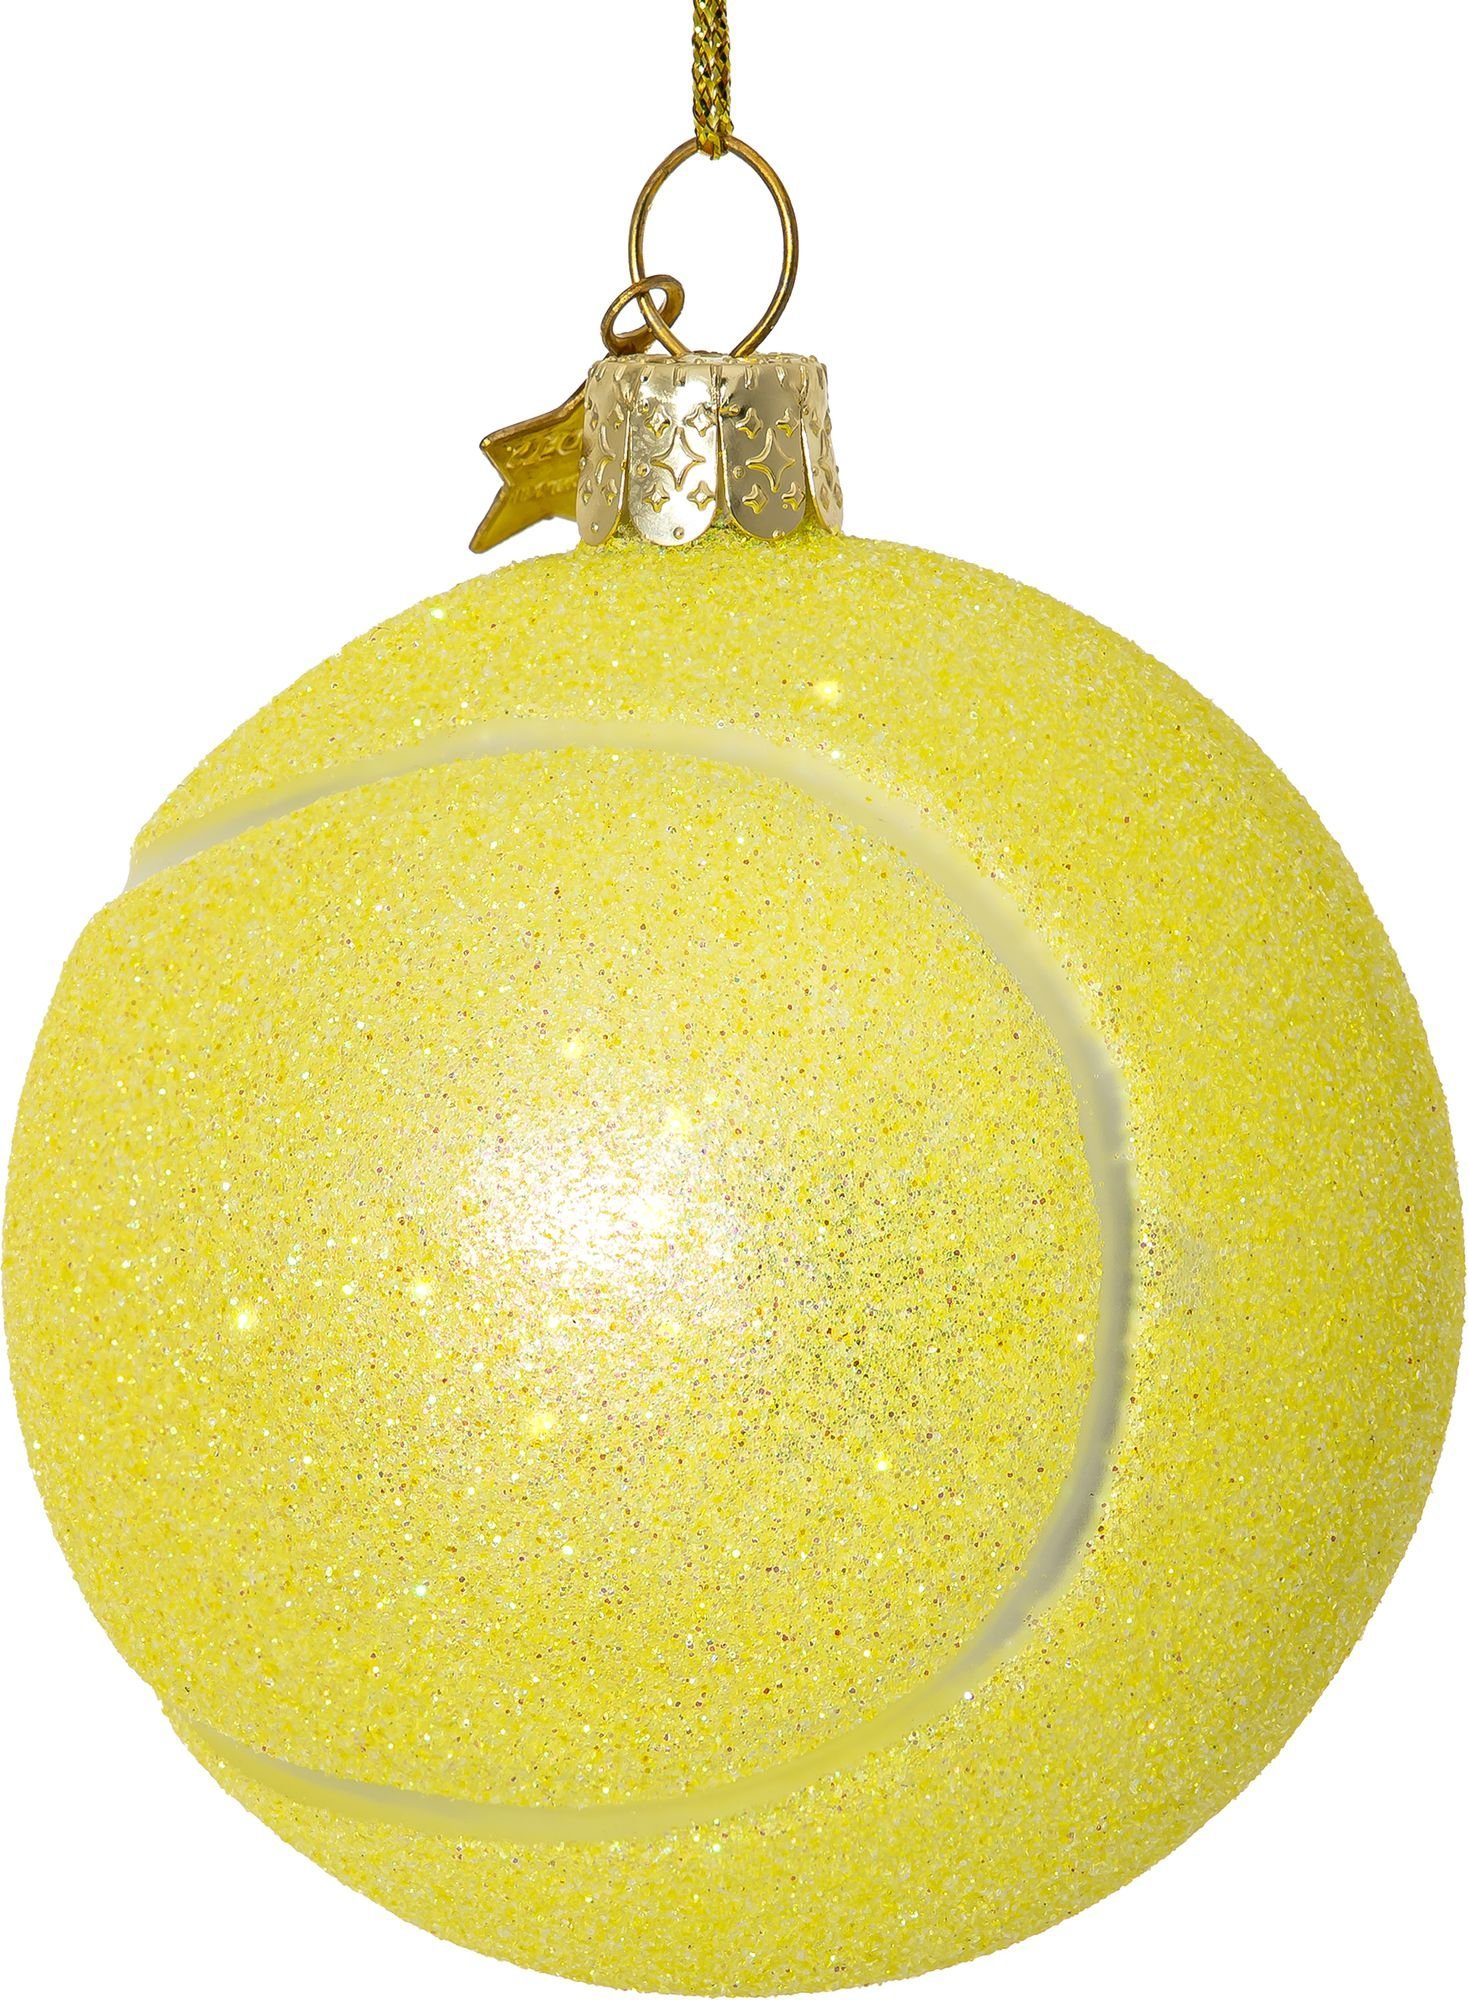 SIKORA Christbaumschmuck BS521 Tennisball Glas Ornament Weihnachtsbaum Anhänger